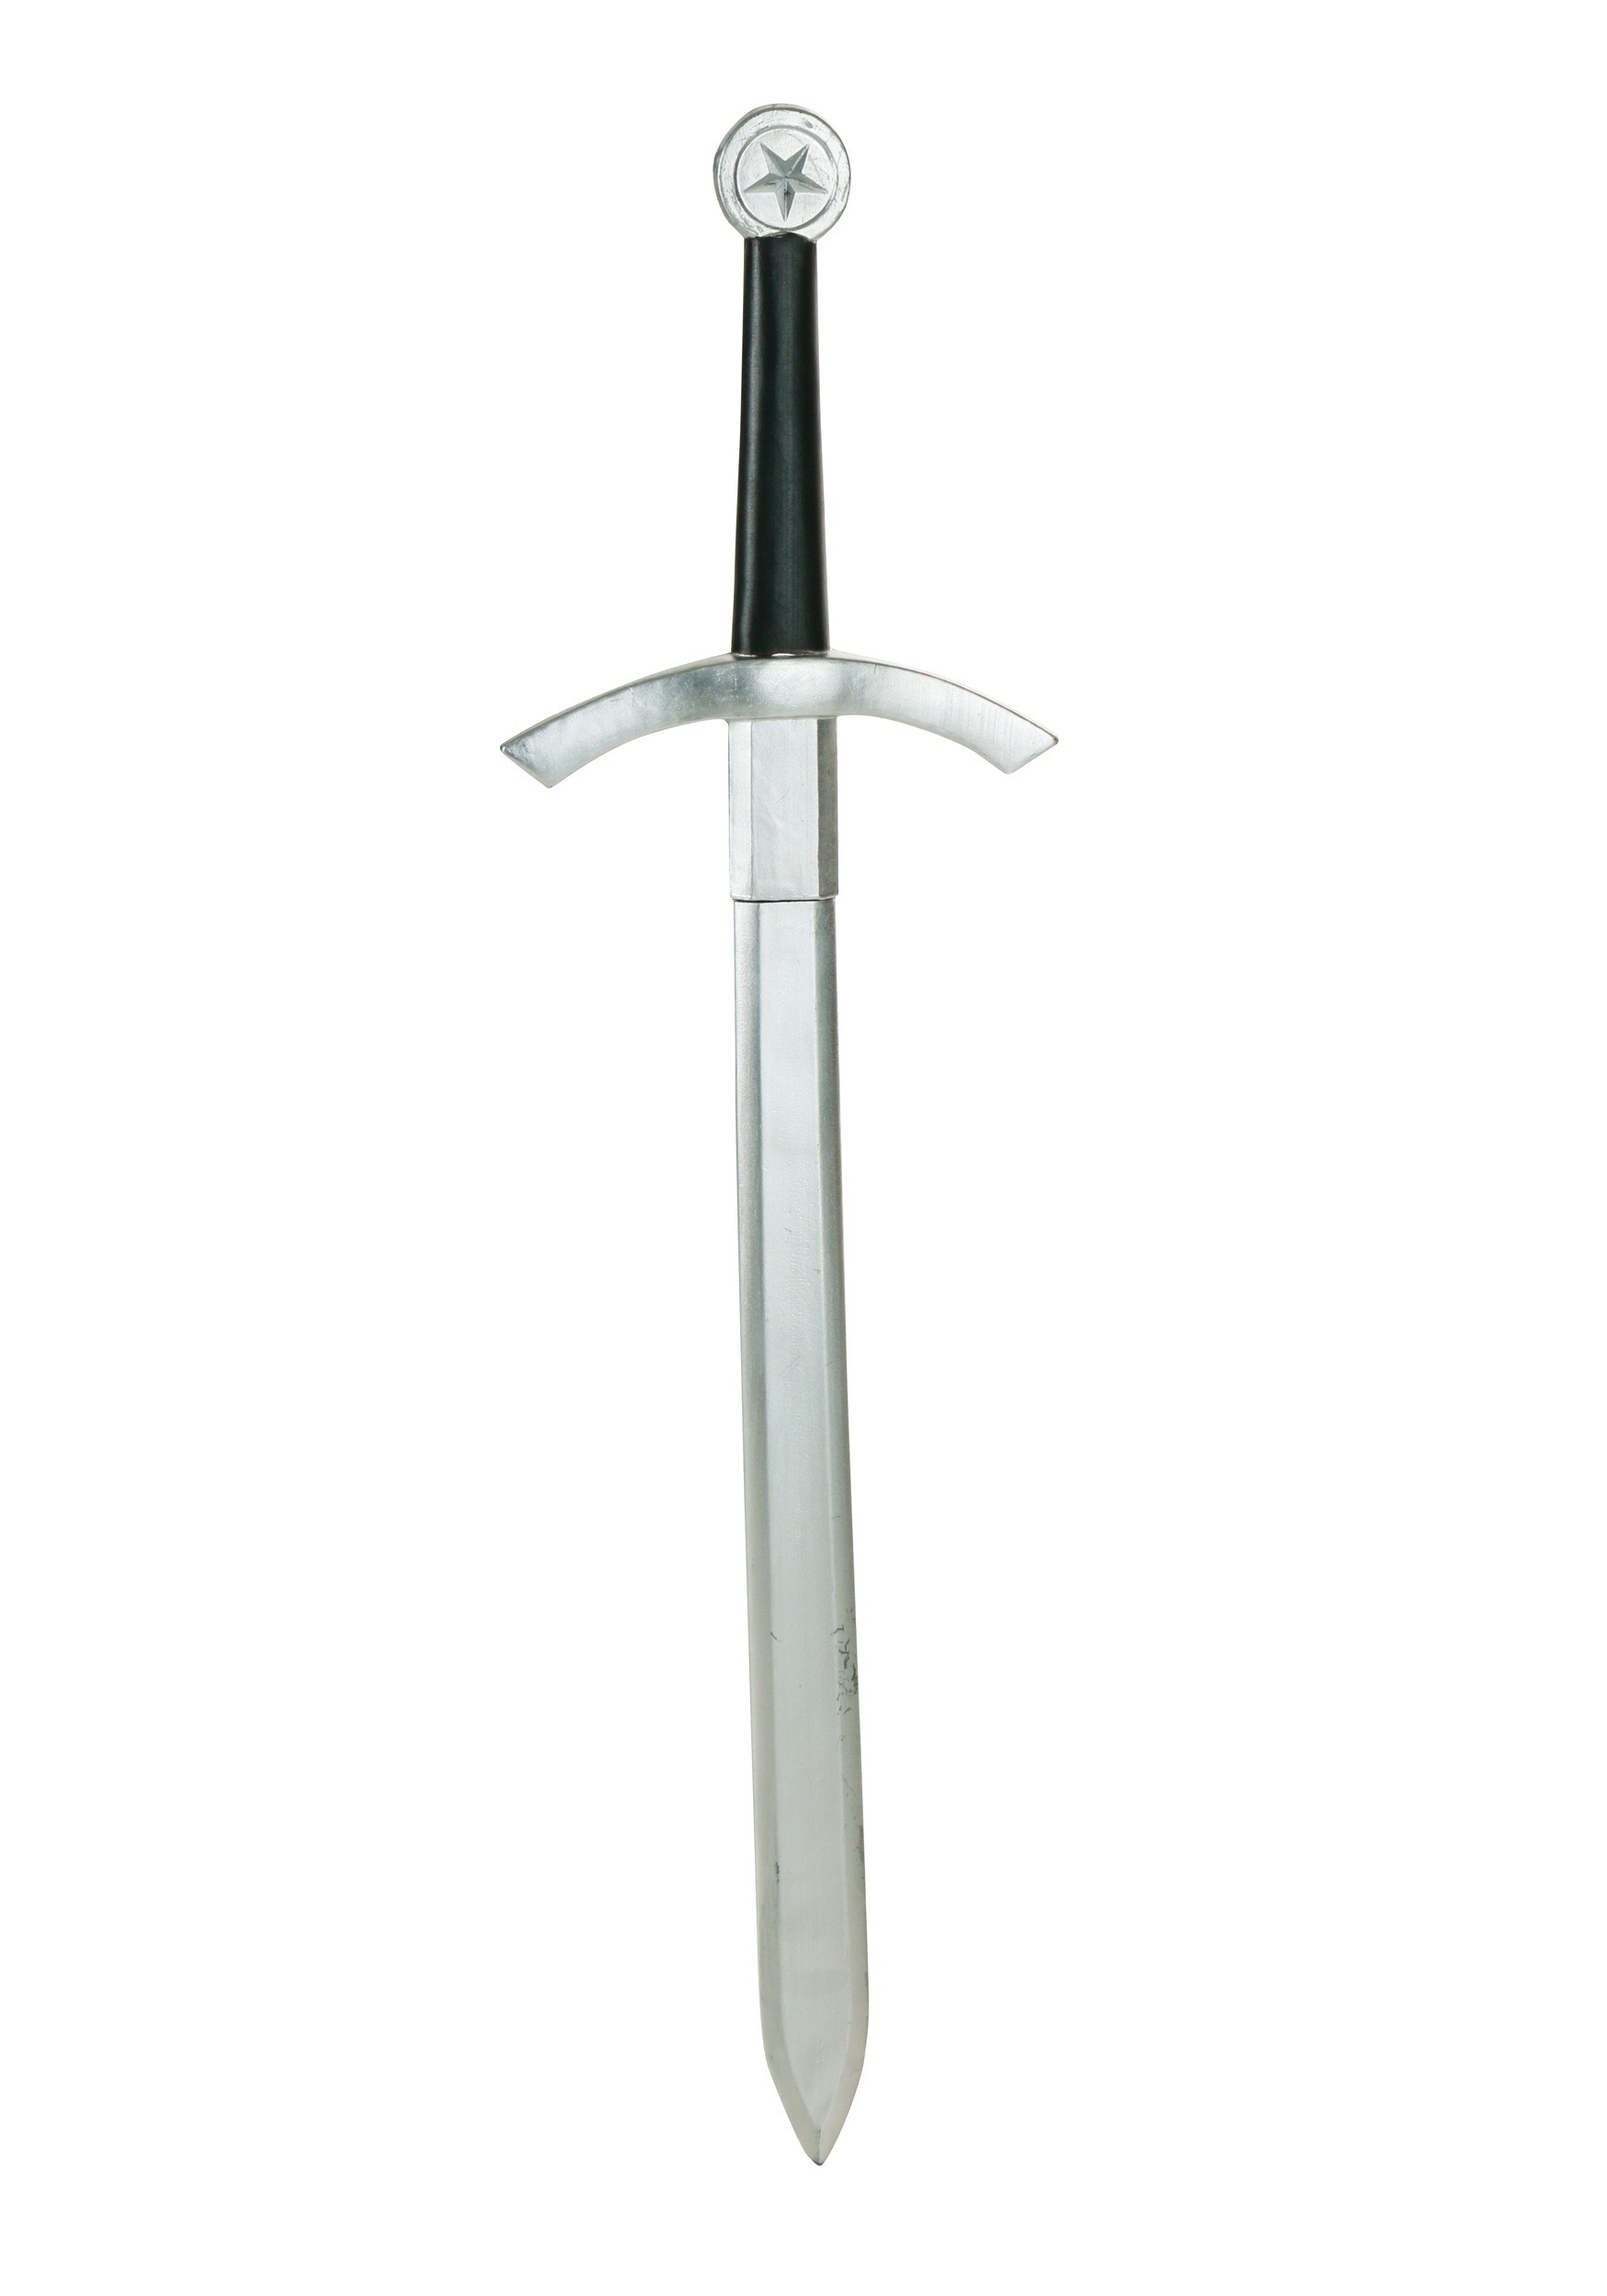 Medieval Battle Knight’s Sword Prop